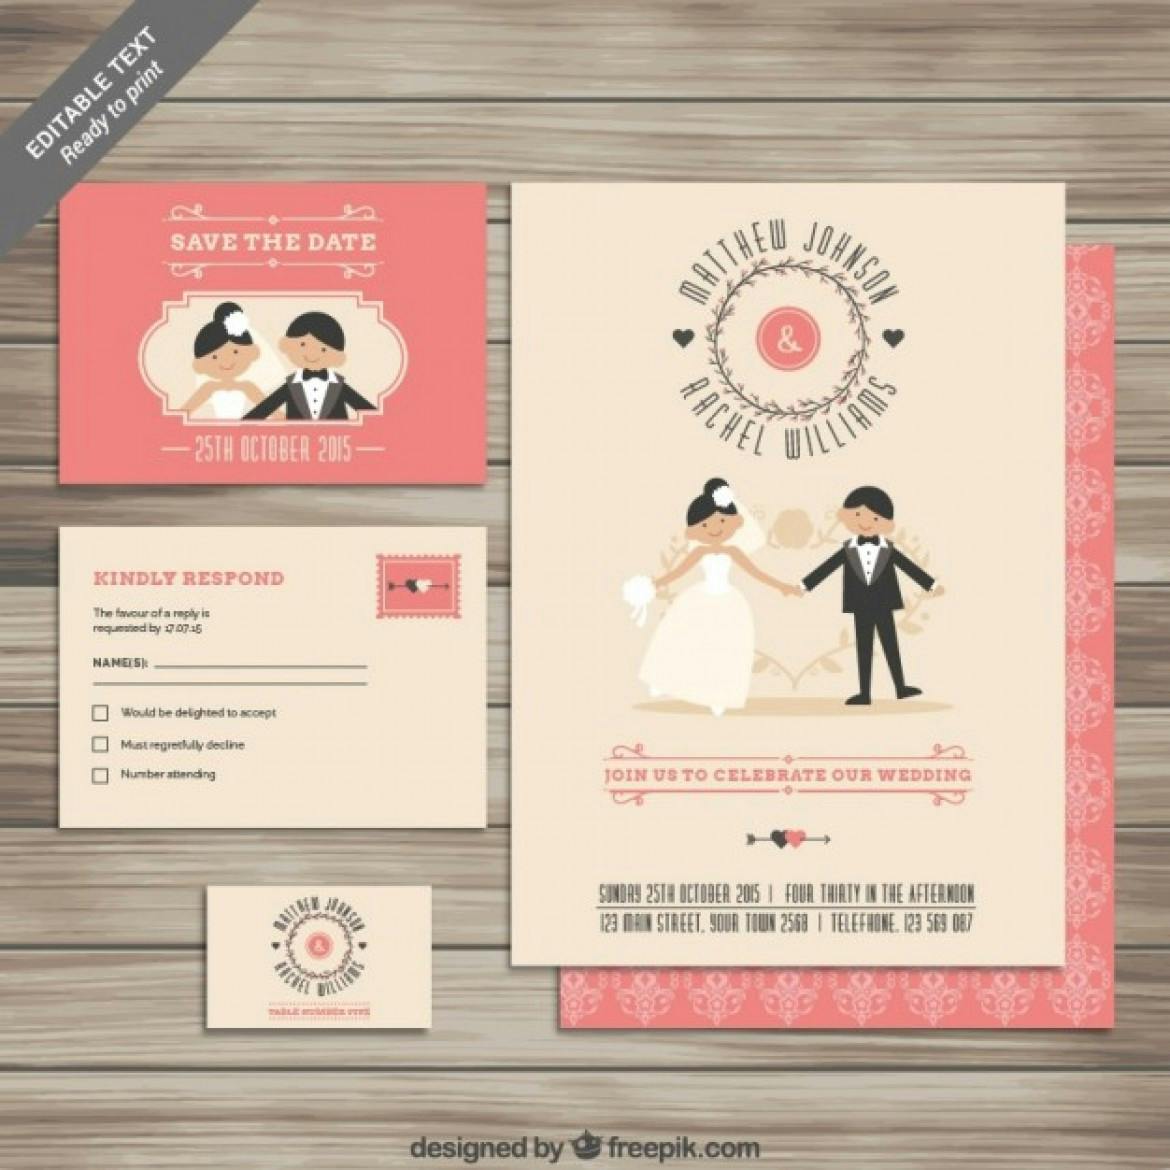 wpid-cute-wedding-invitation-collection_23-2147510042-1170x1170